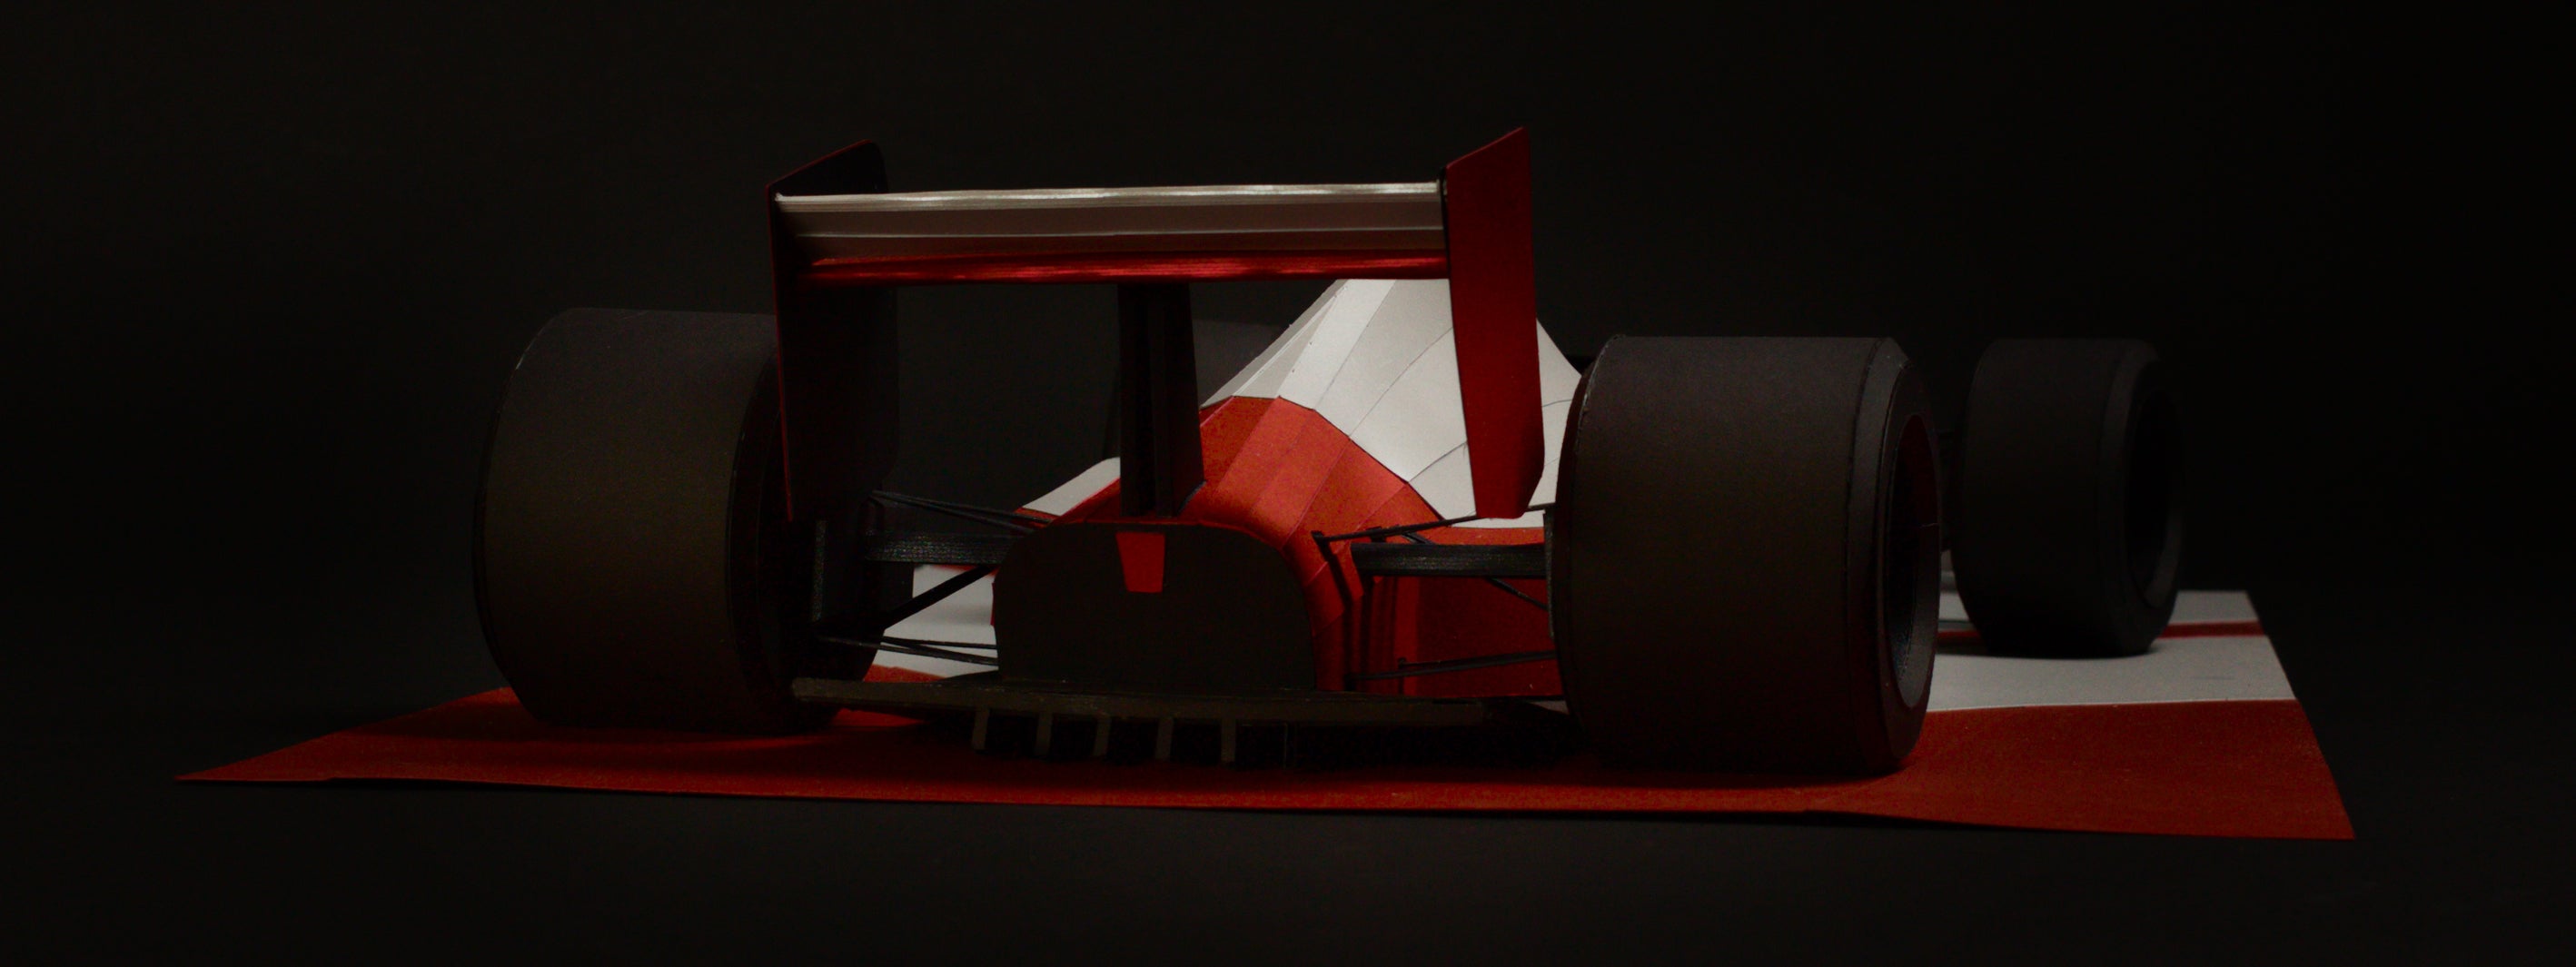 Formula 1 Legend car sculpture - Back view